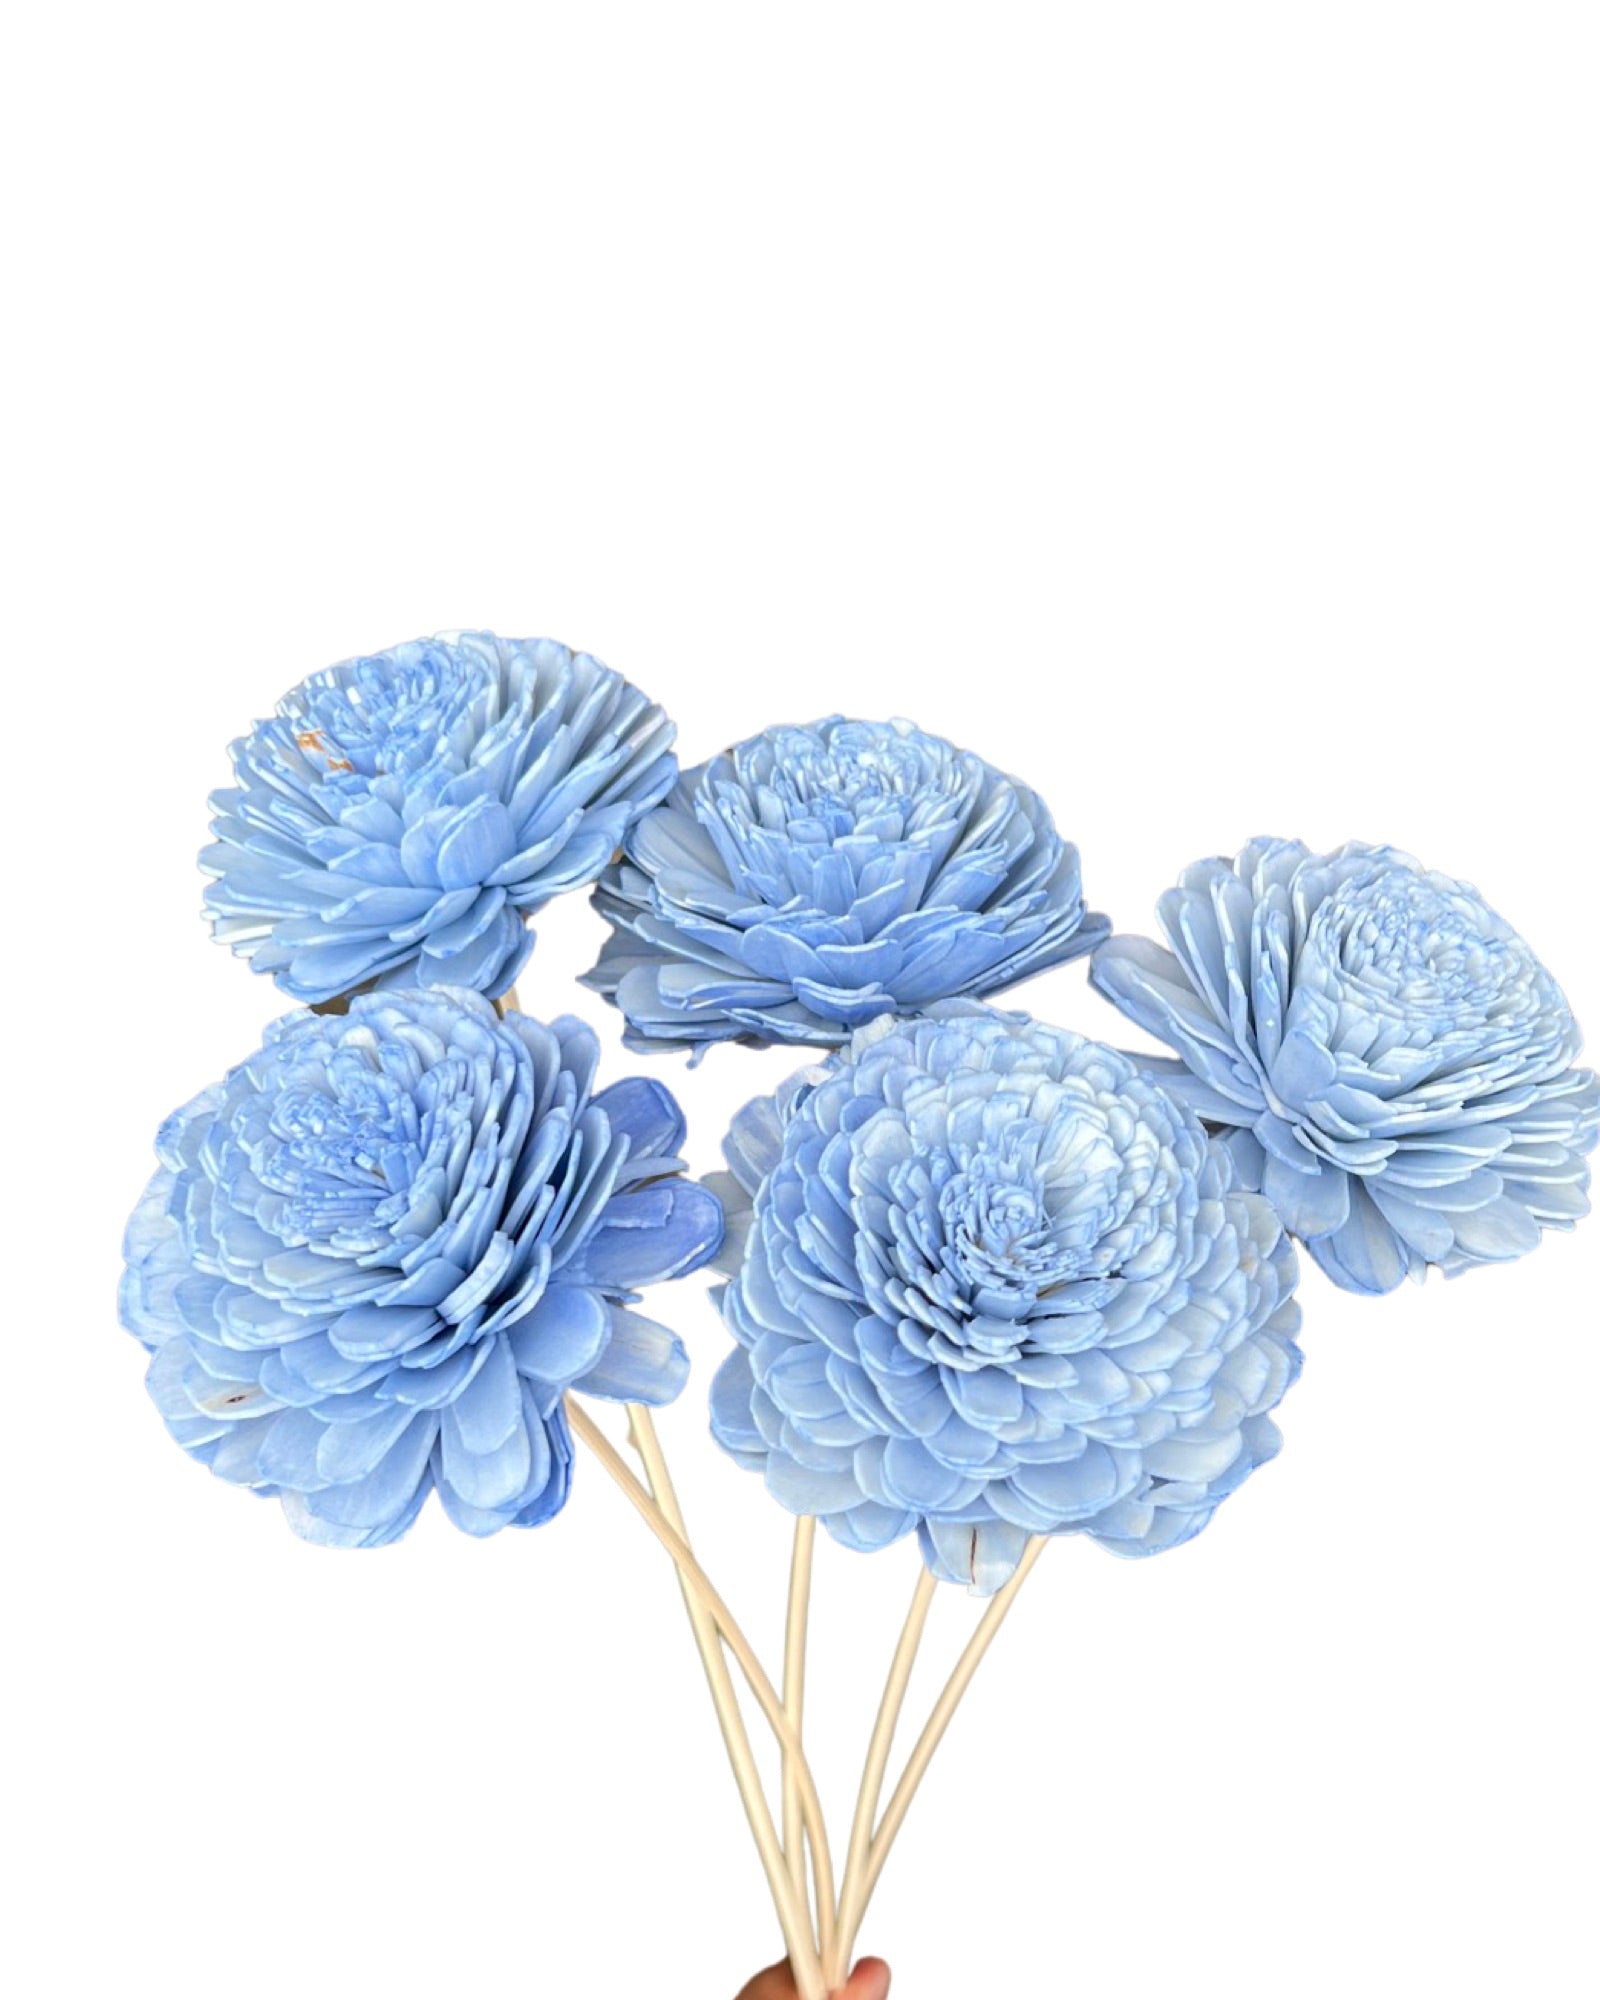 Ranculus Stellar wand(paper flower) - Blue